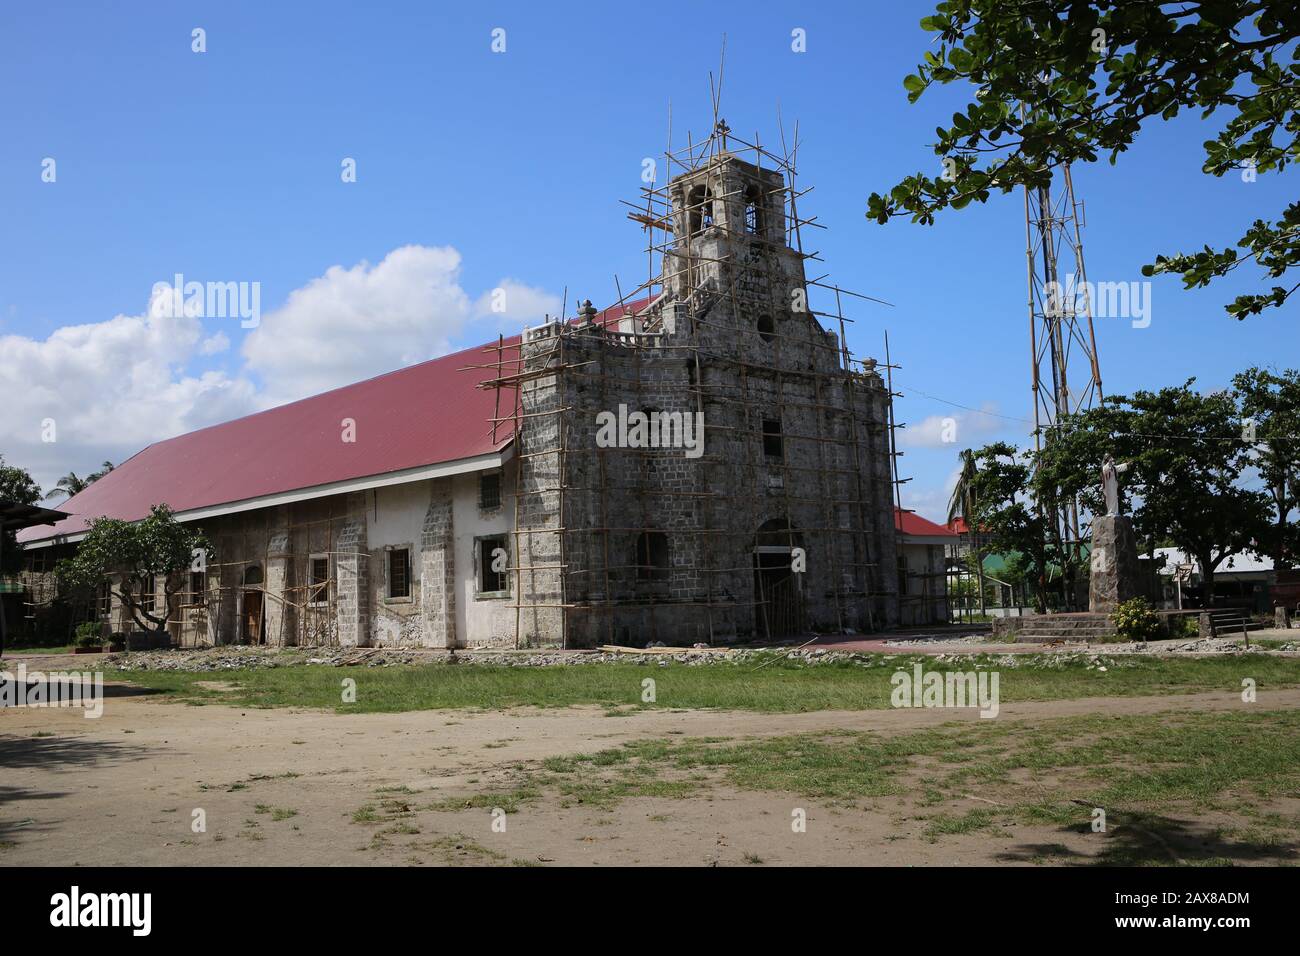 Catholic Church in the Philippines Stock Photo - Alamy